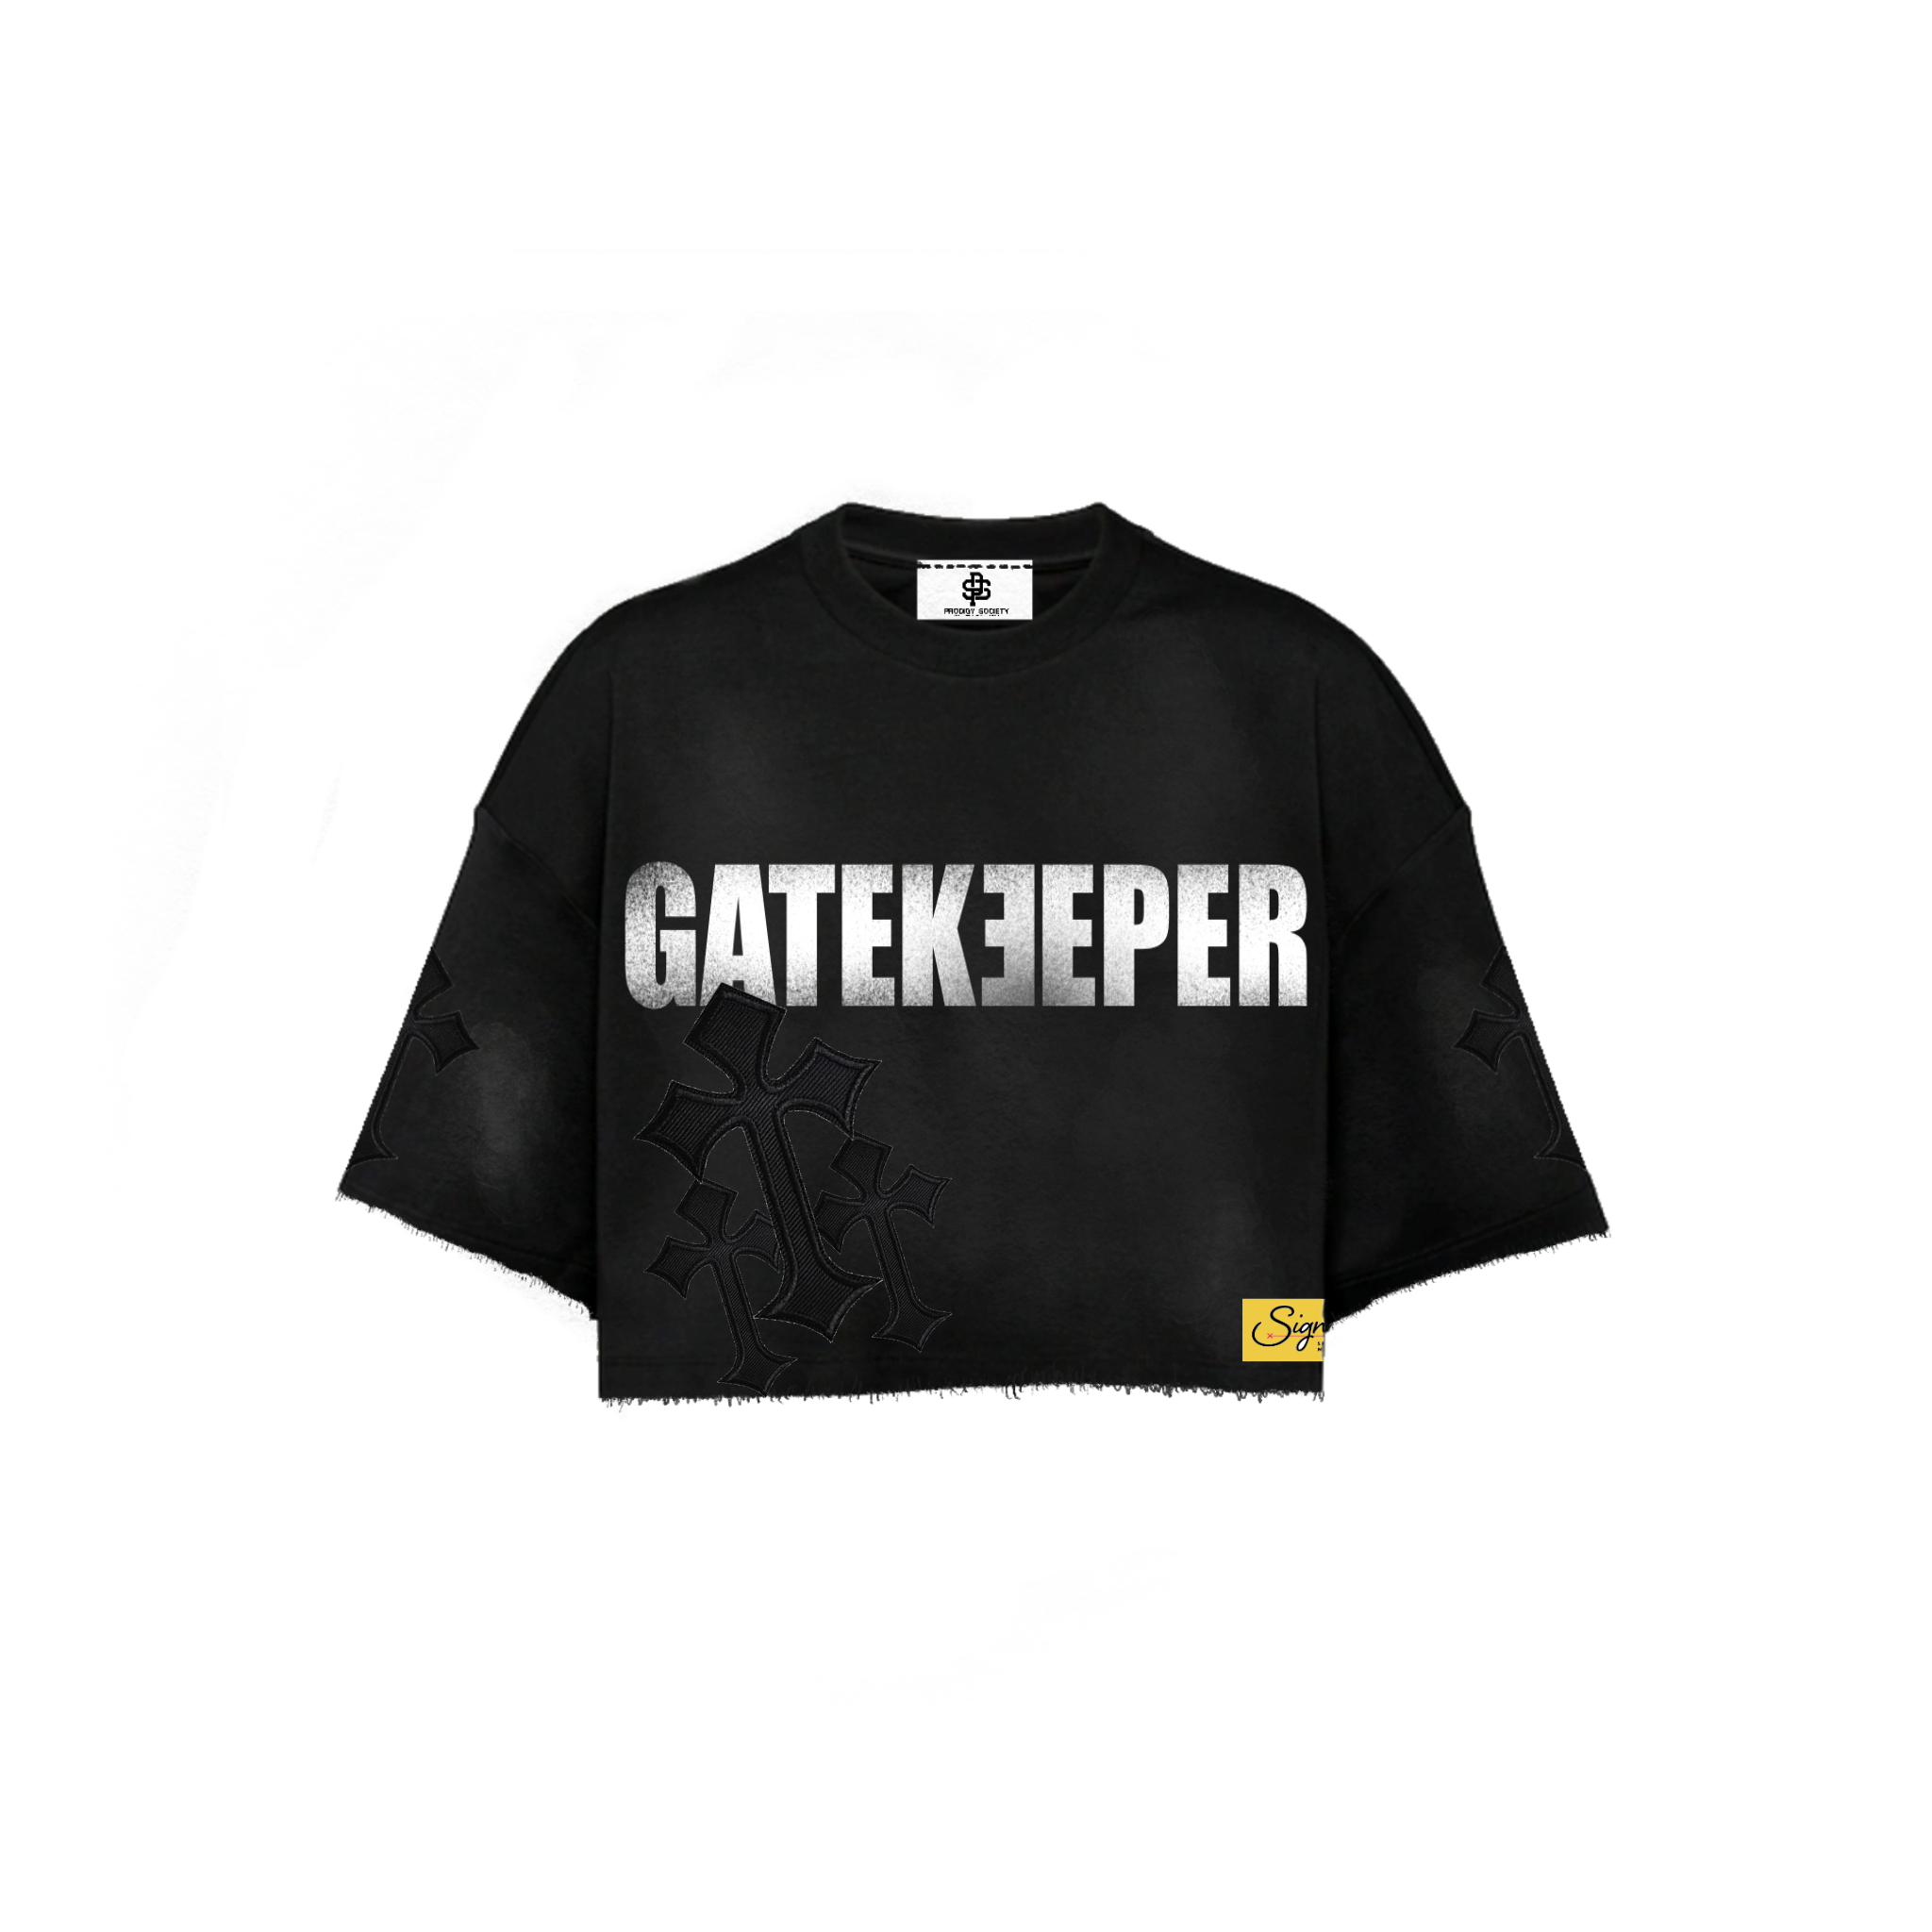 PJCT “GATEKEEPER”